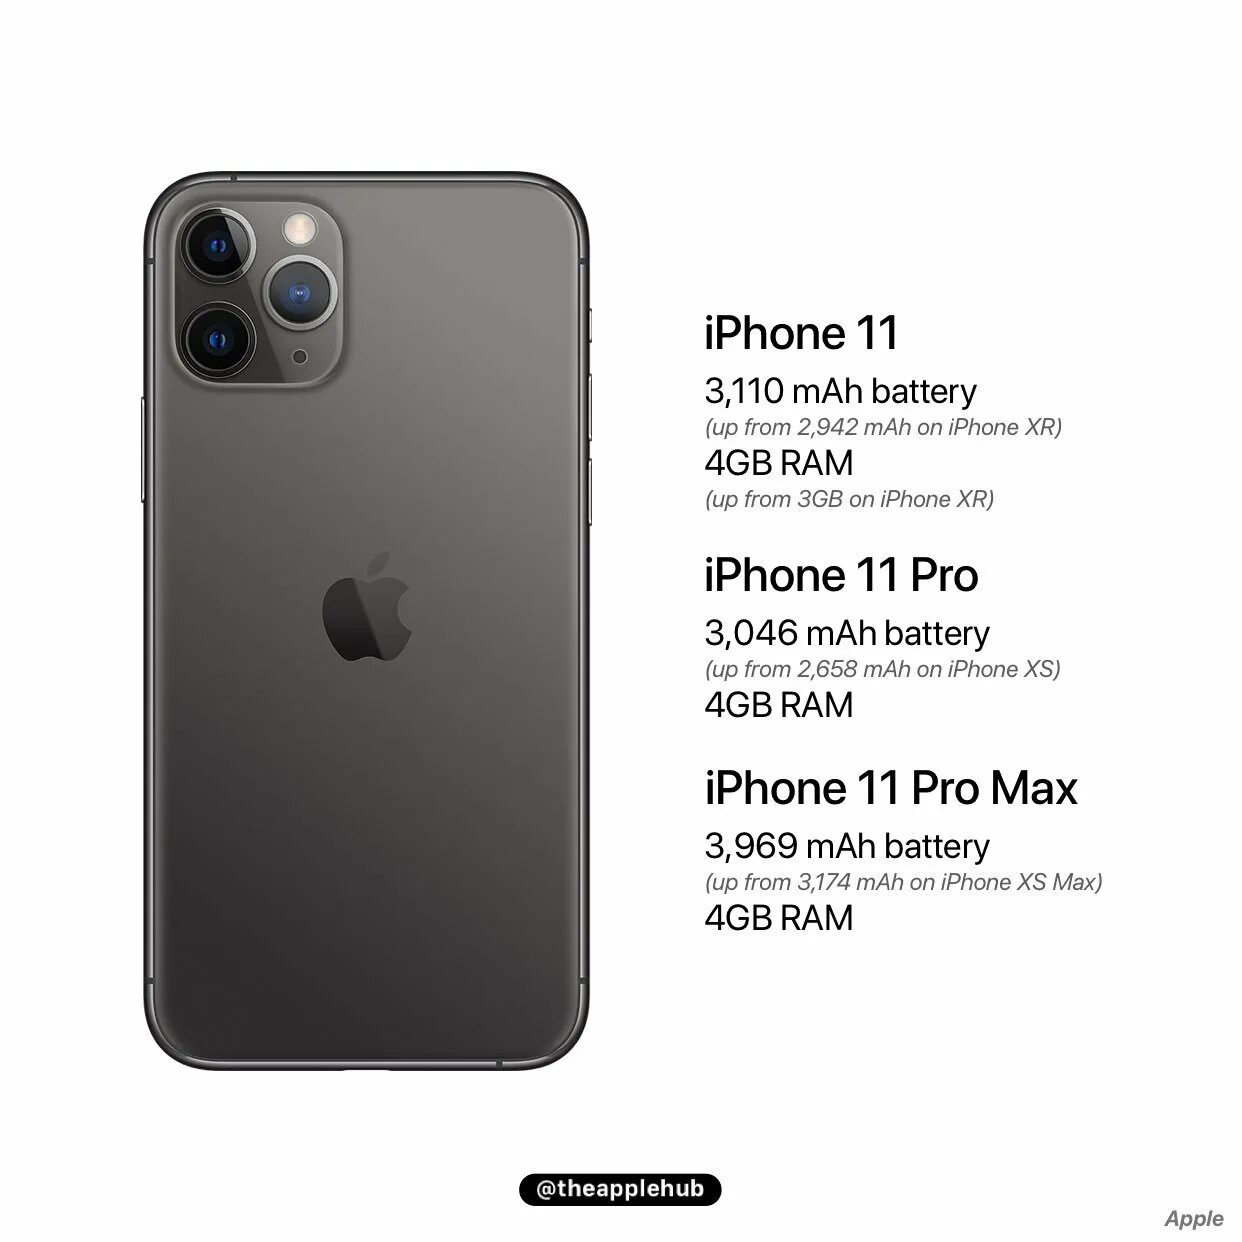 Iphone 11 Pro Max Battery МАЧ. Iphone 11 Pro Max Battery емкость. Iphone 11 Pro Battery. Iphone 11 Pro Pro Max. Айфон 11 миллиампер